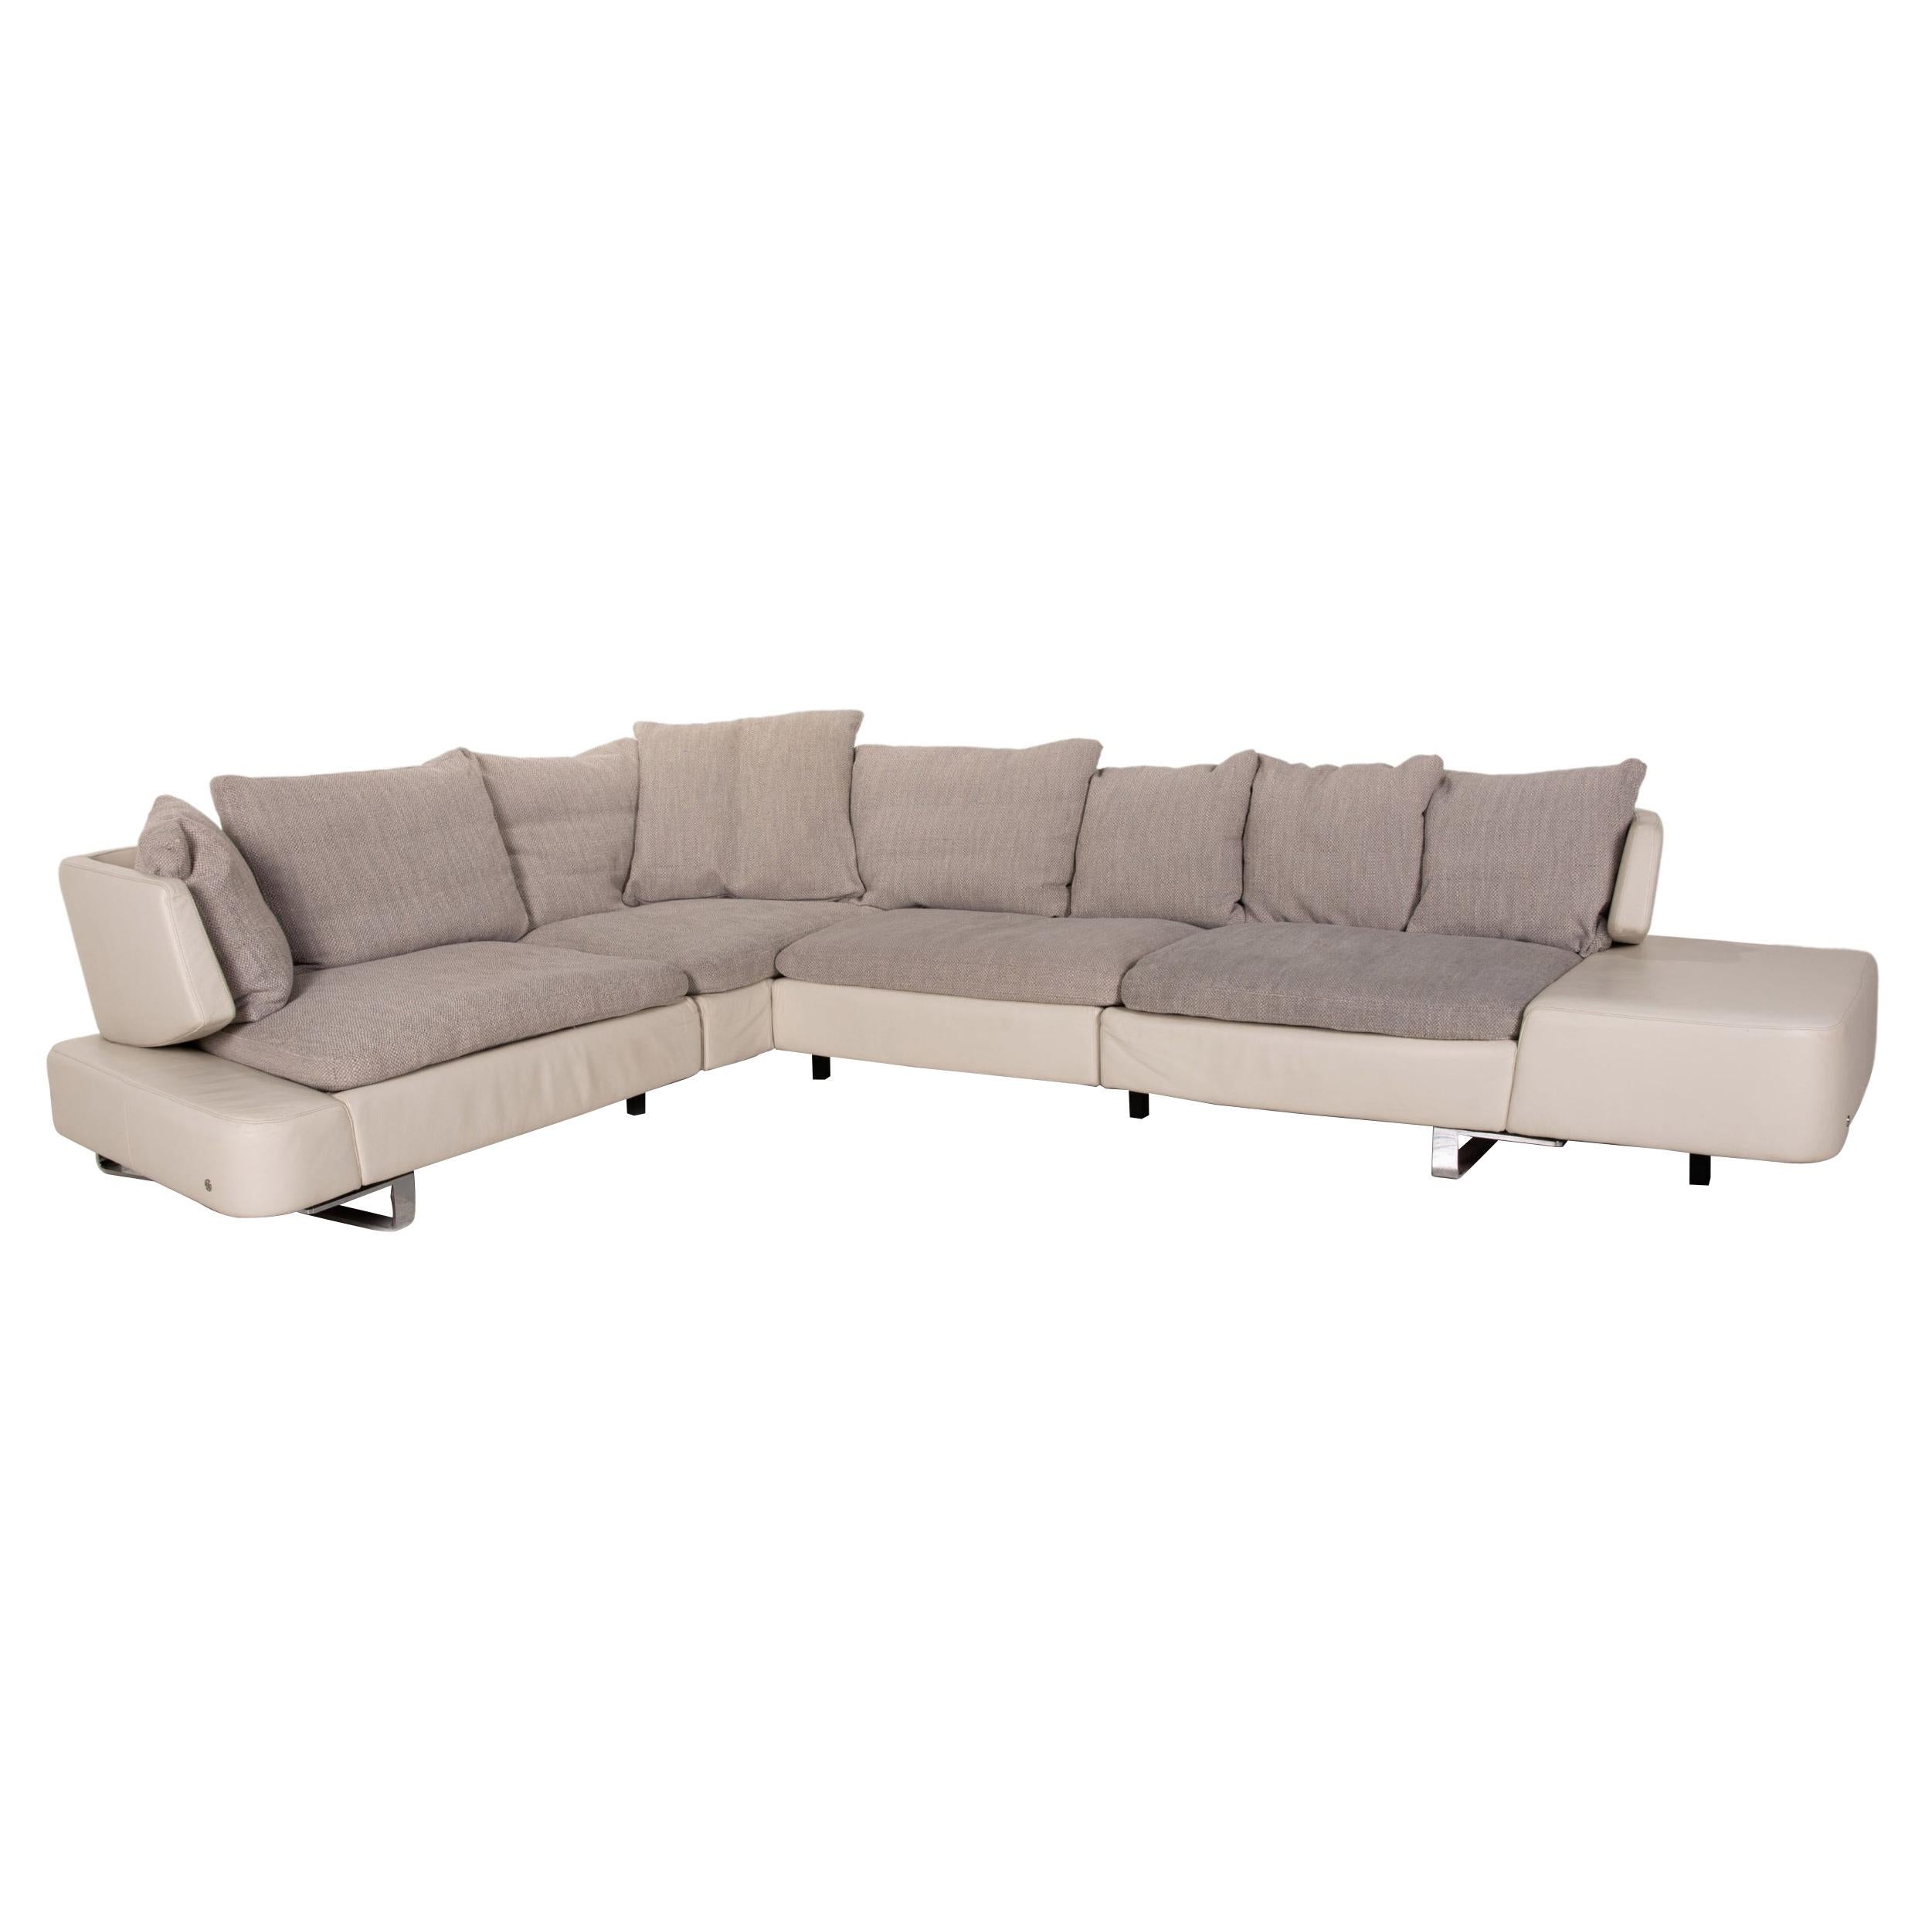 Natuzzi Opus Leather Fabric Corner Sofa Gray Cream Sofa Couch For Sale